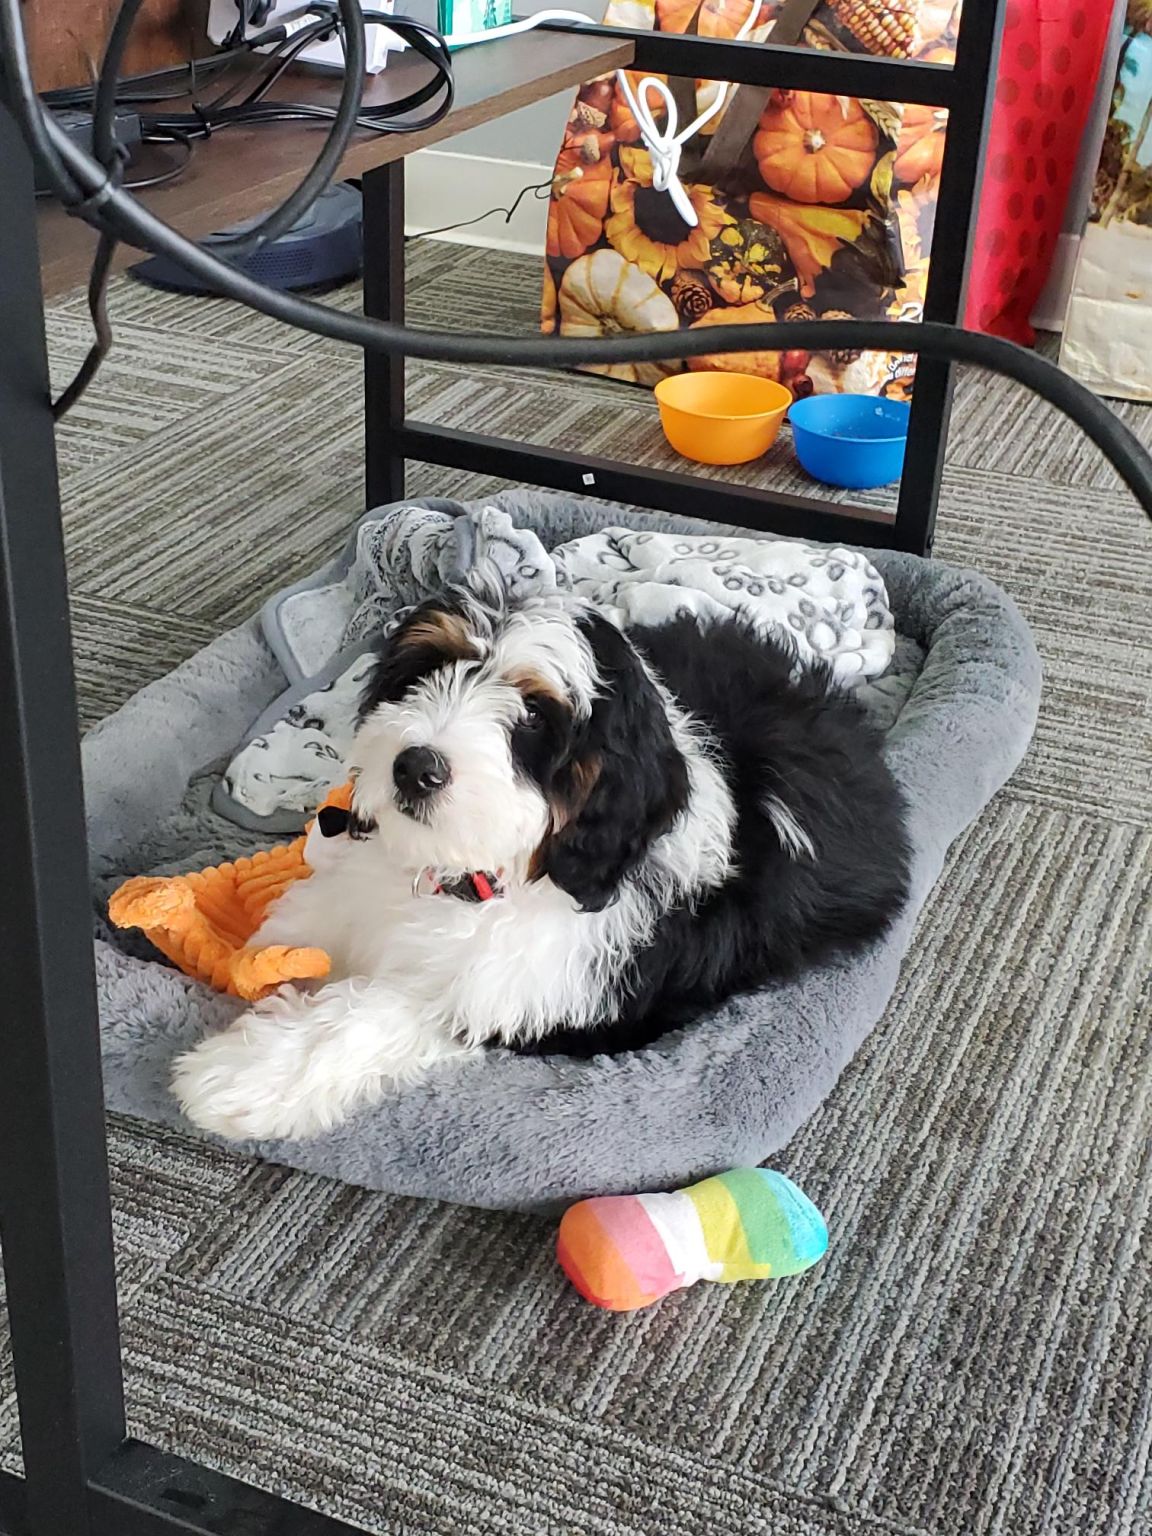 Anthony Carrea on LinkedIn: I always wanted an office dog!